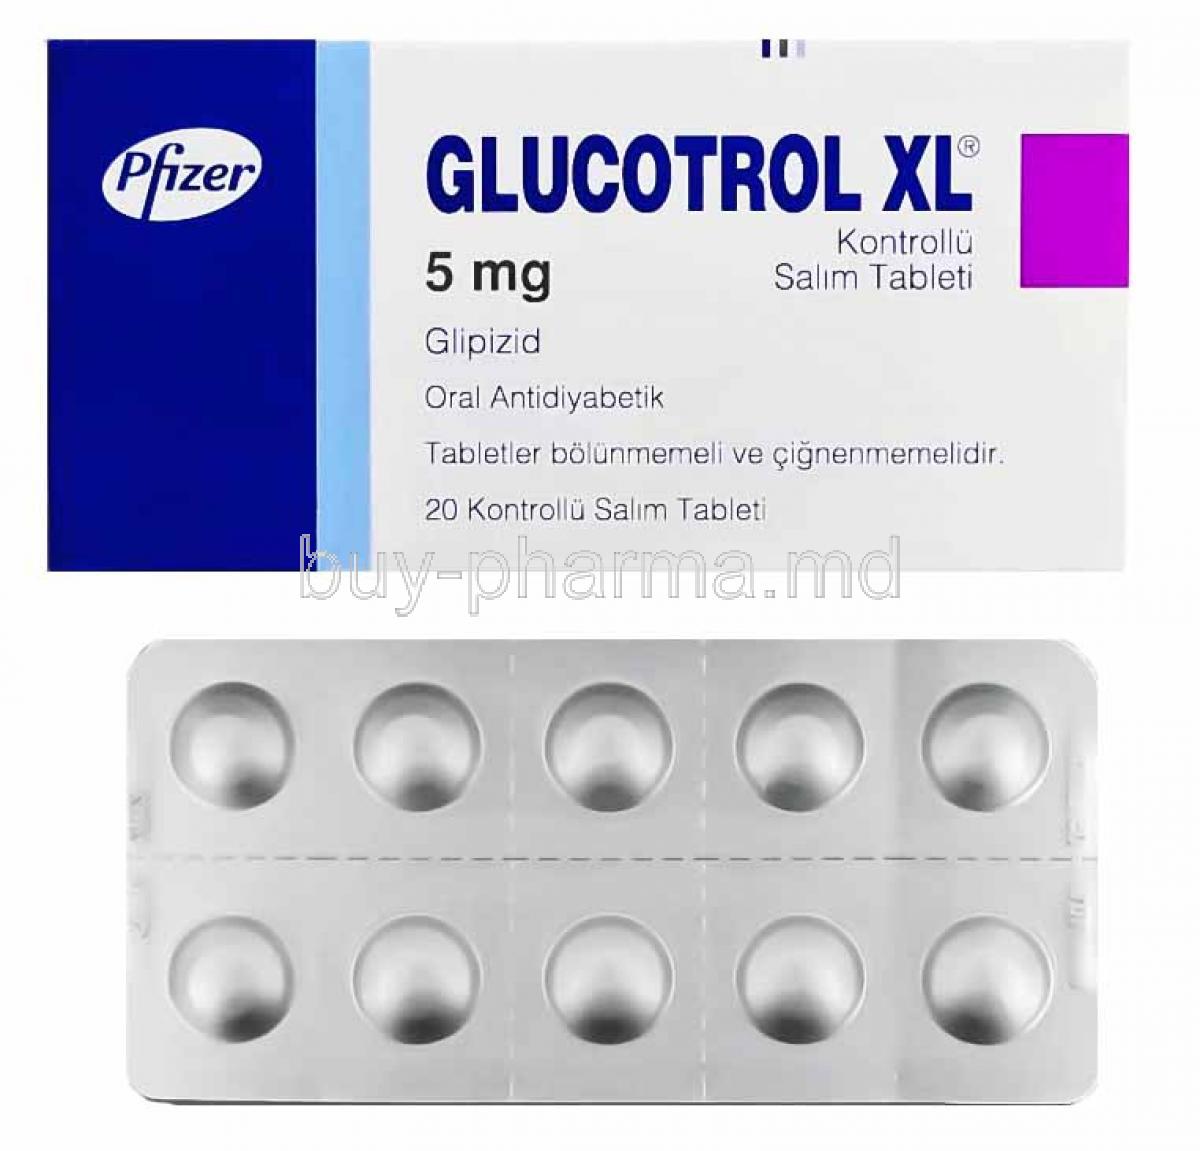 Prednisone 10 mg goodrx